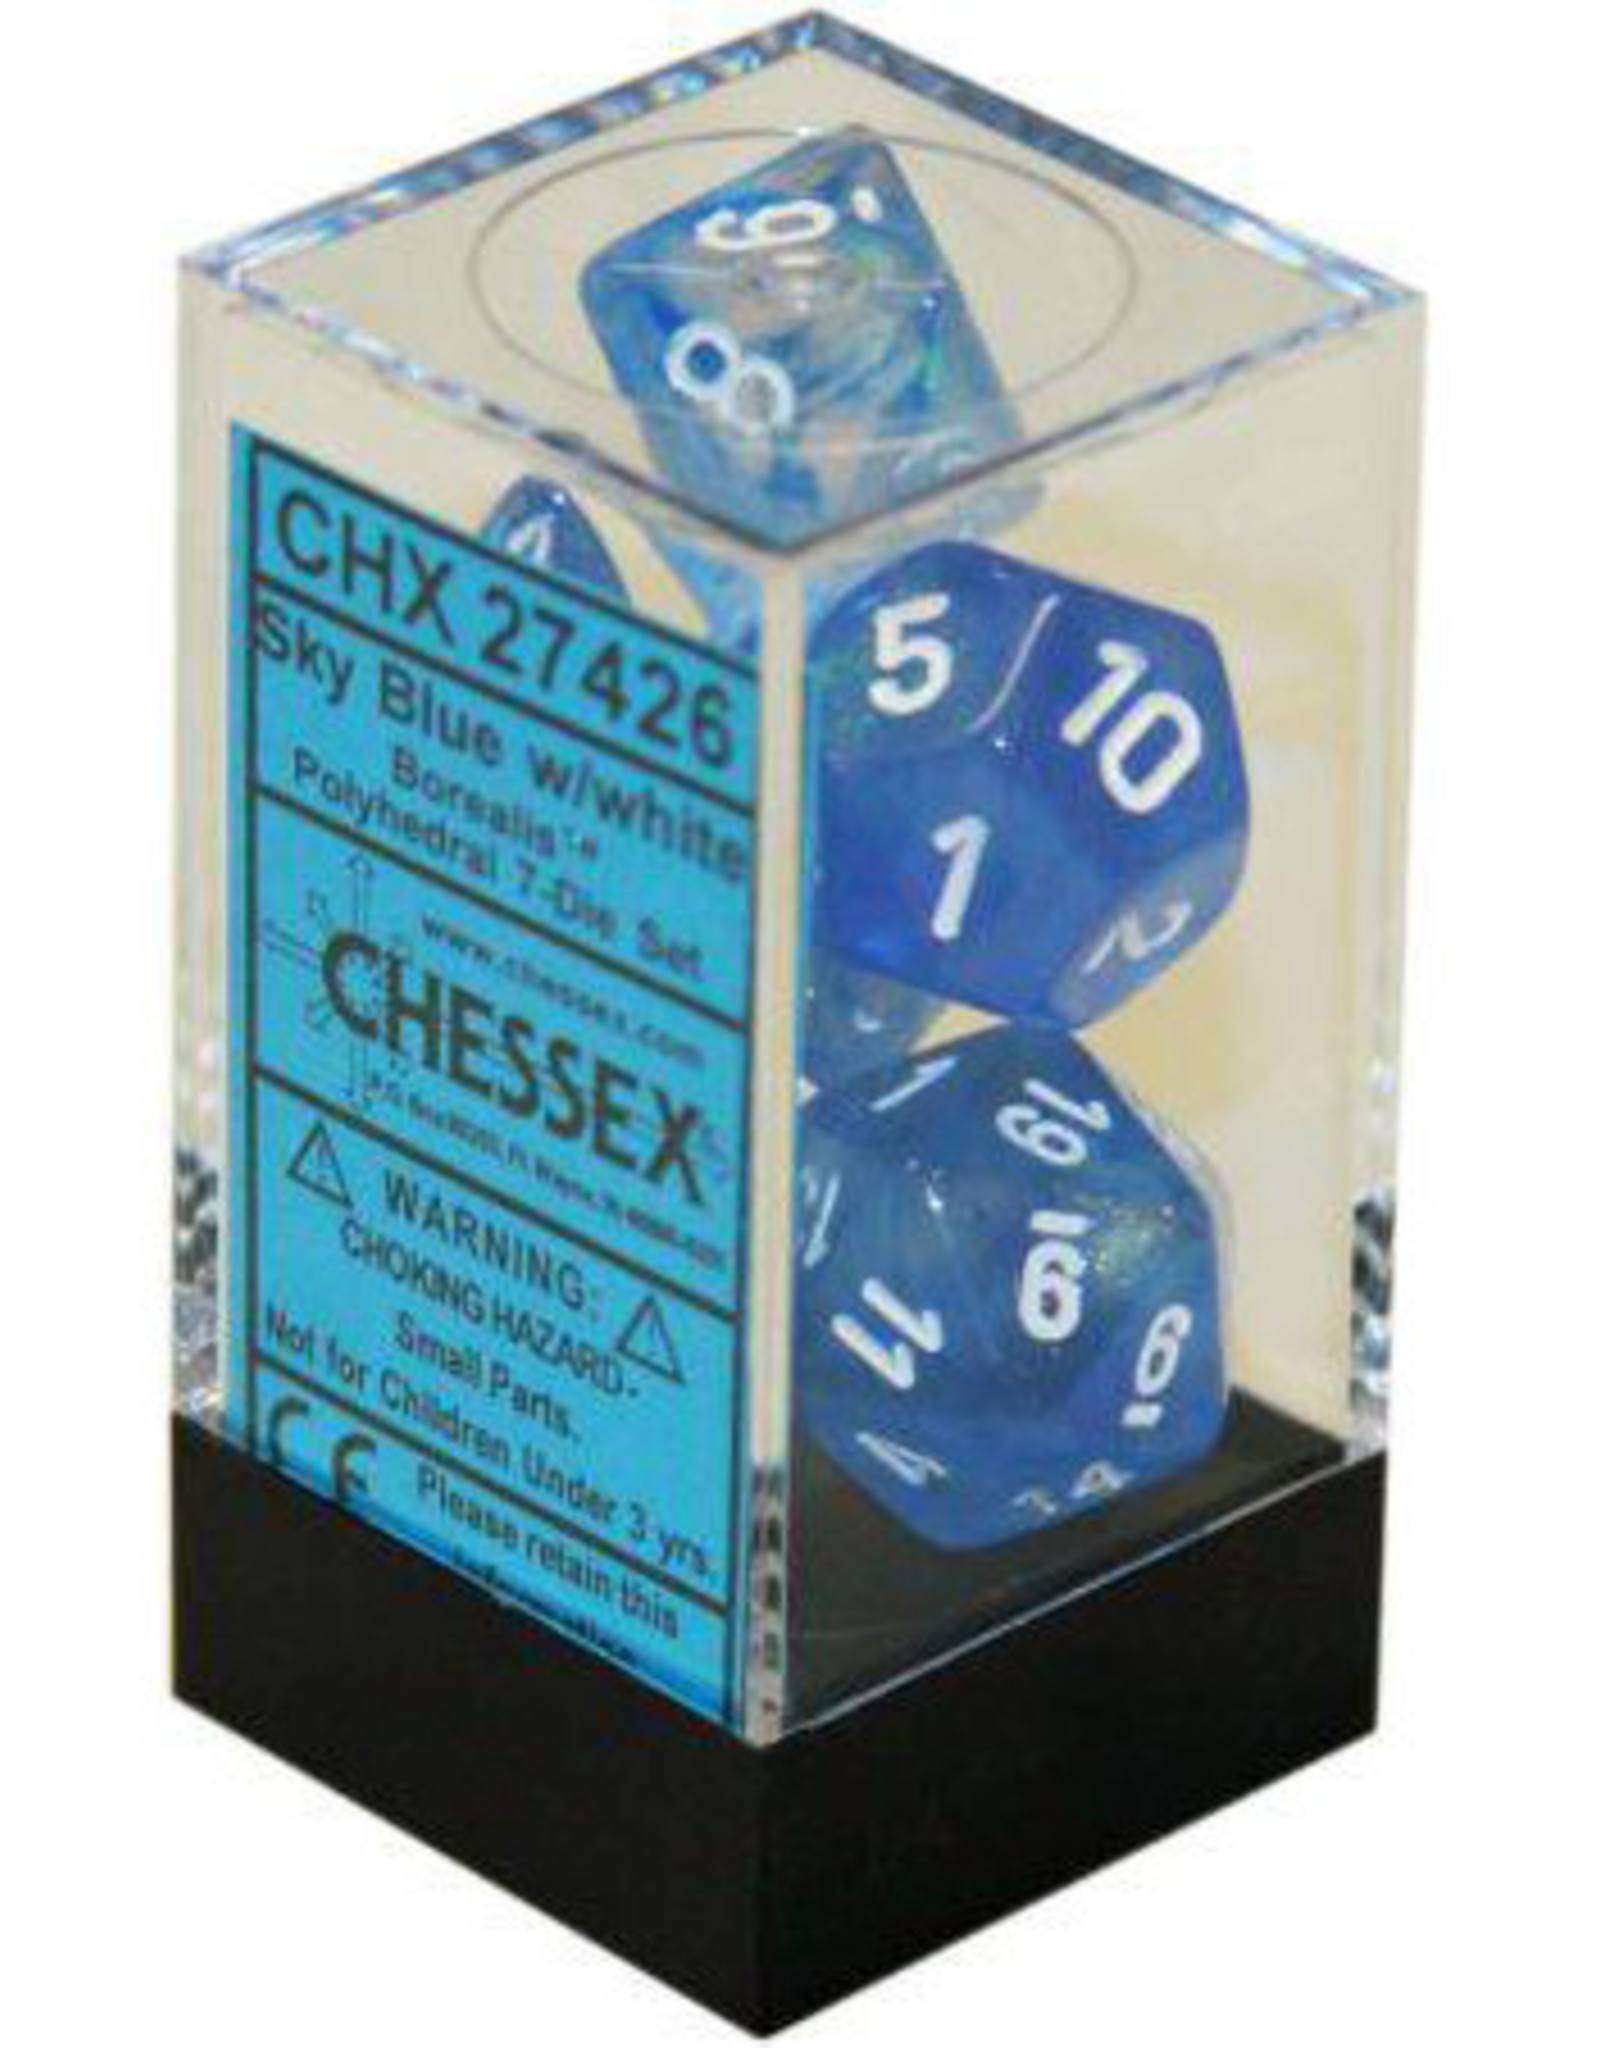 Chessex 7Ct Dice Set CHX27426 Borealis Sky Blue/White